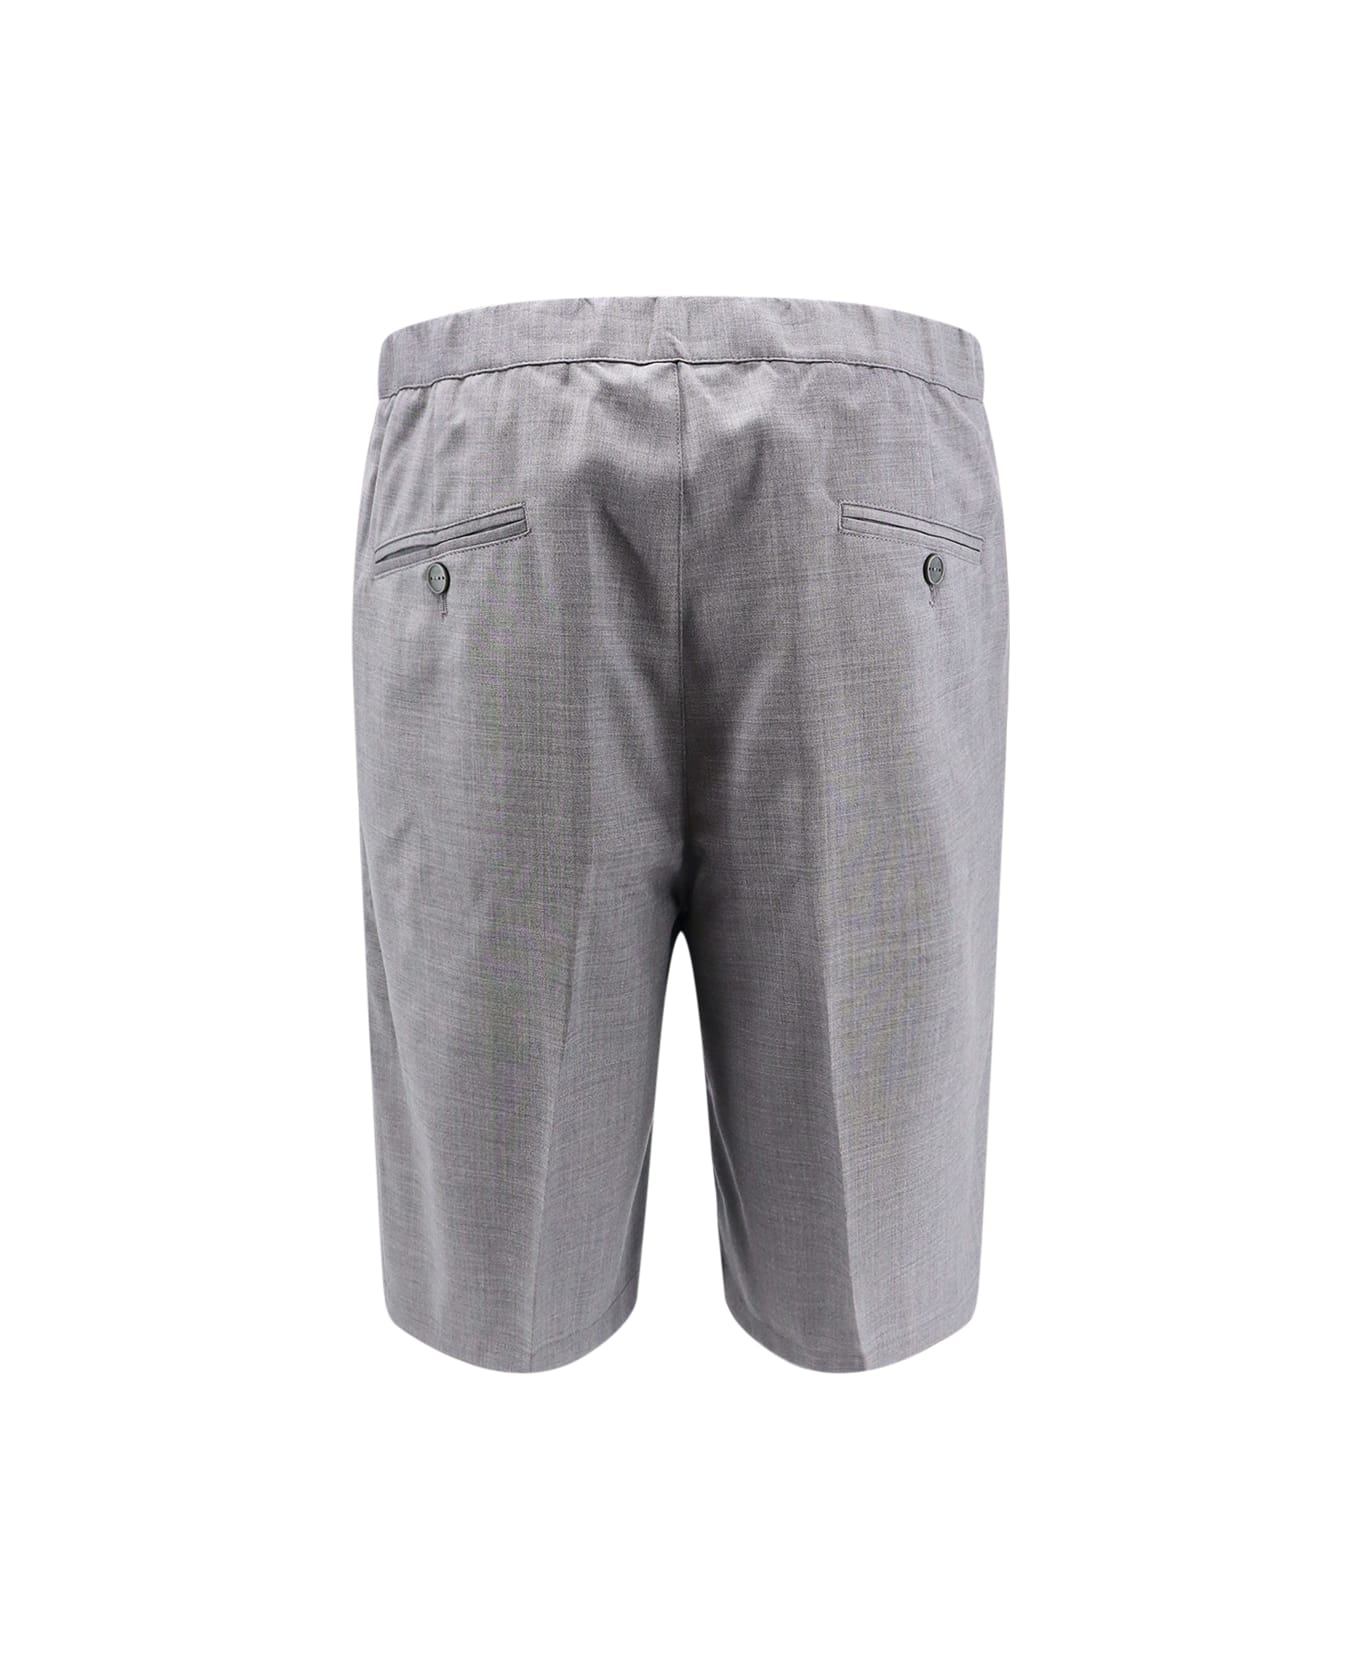 Hevò Torrelapillo Bermuda Shorts - Grey